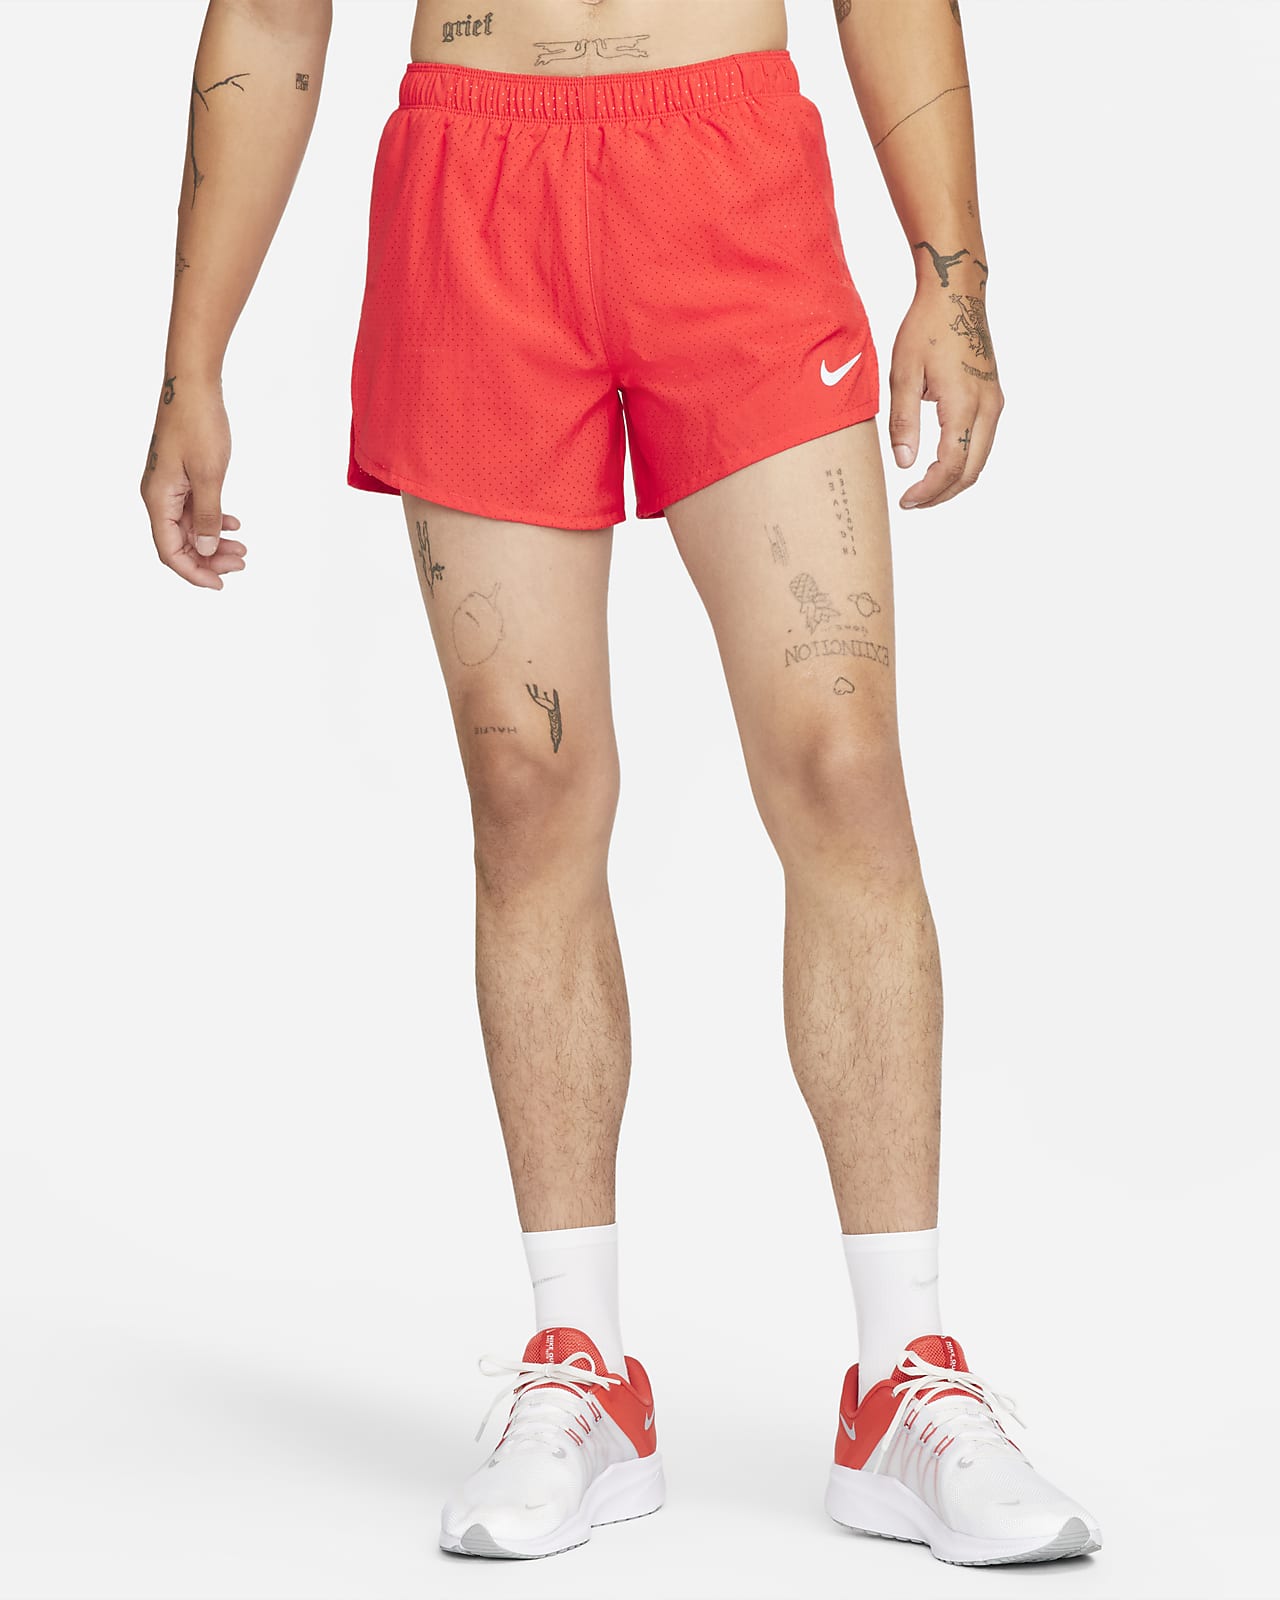 nike fast running shorts mens